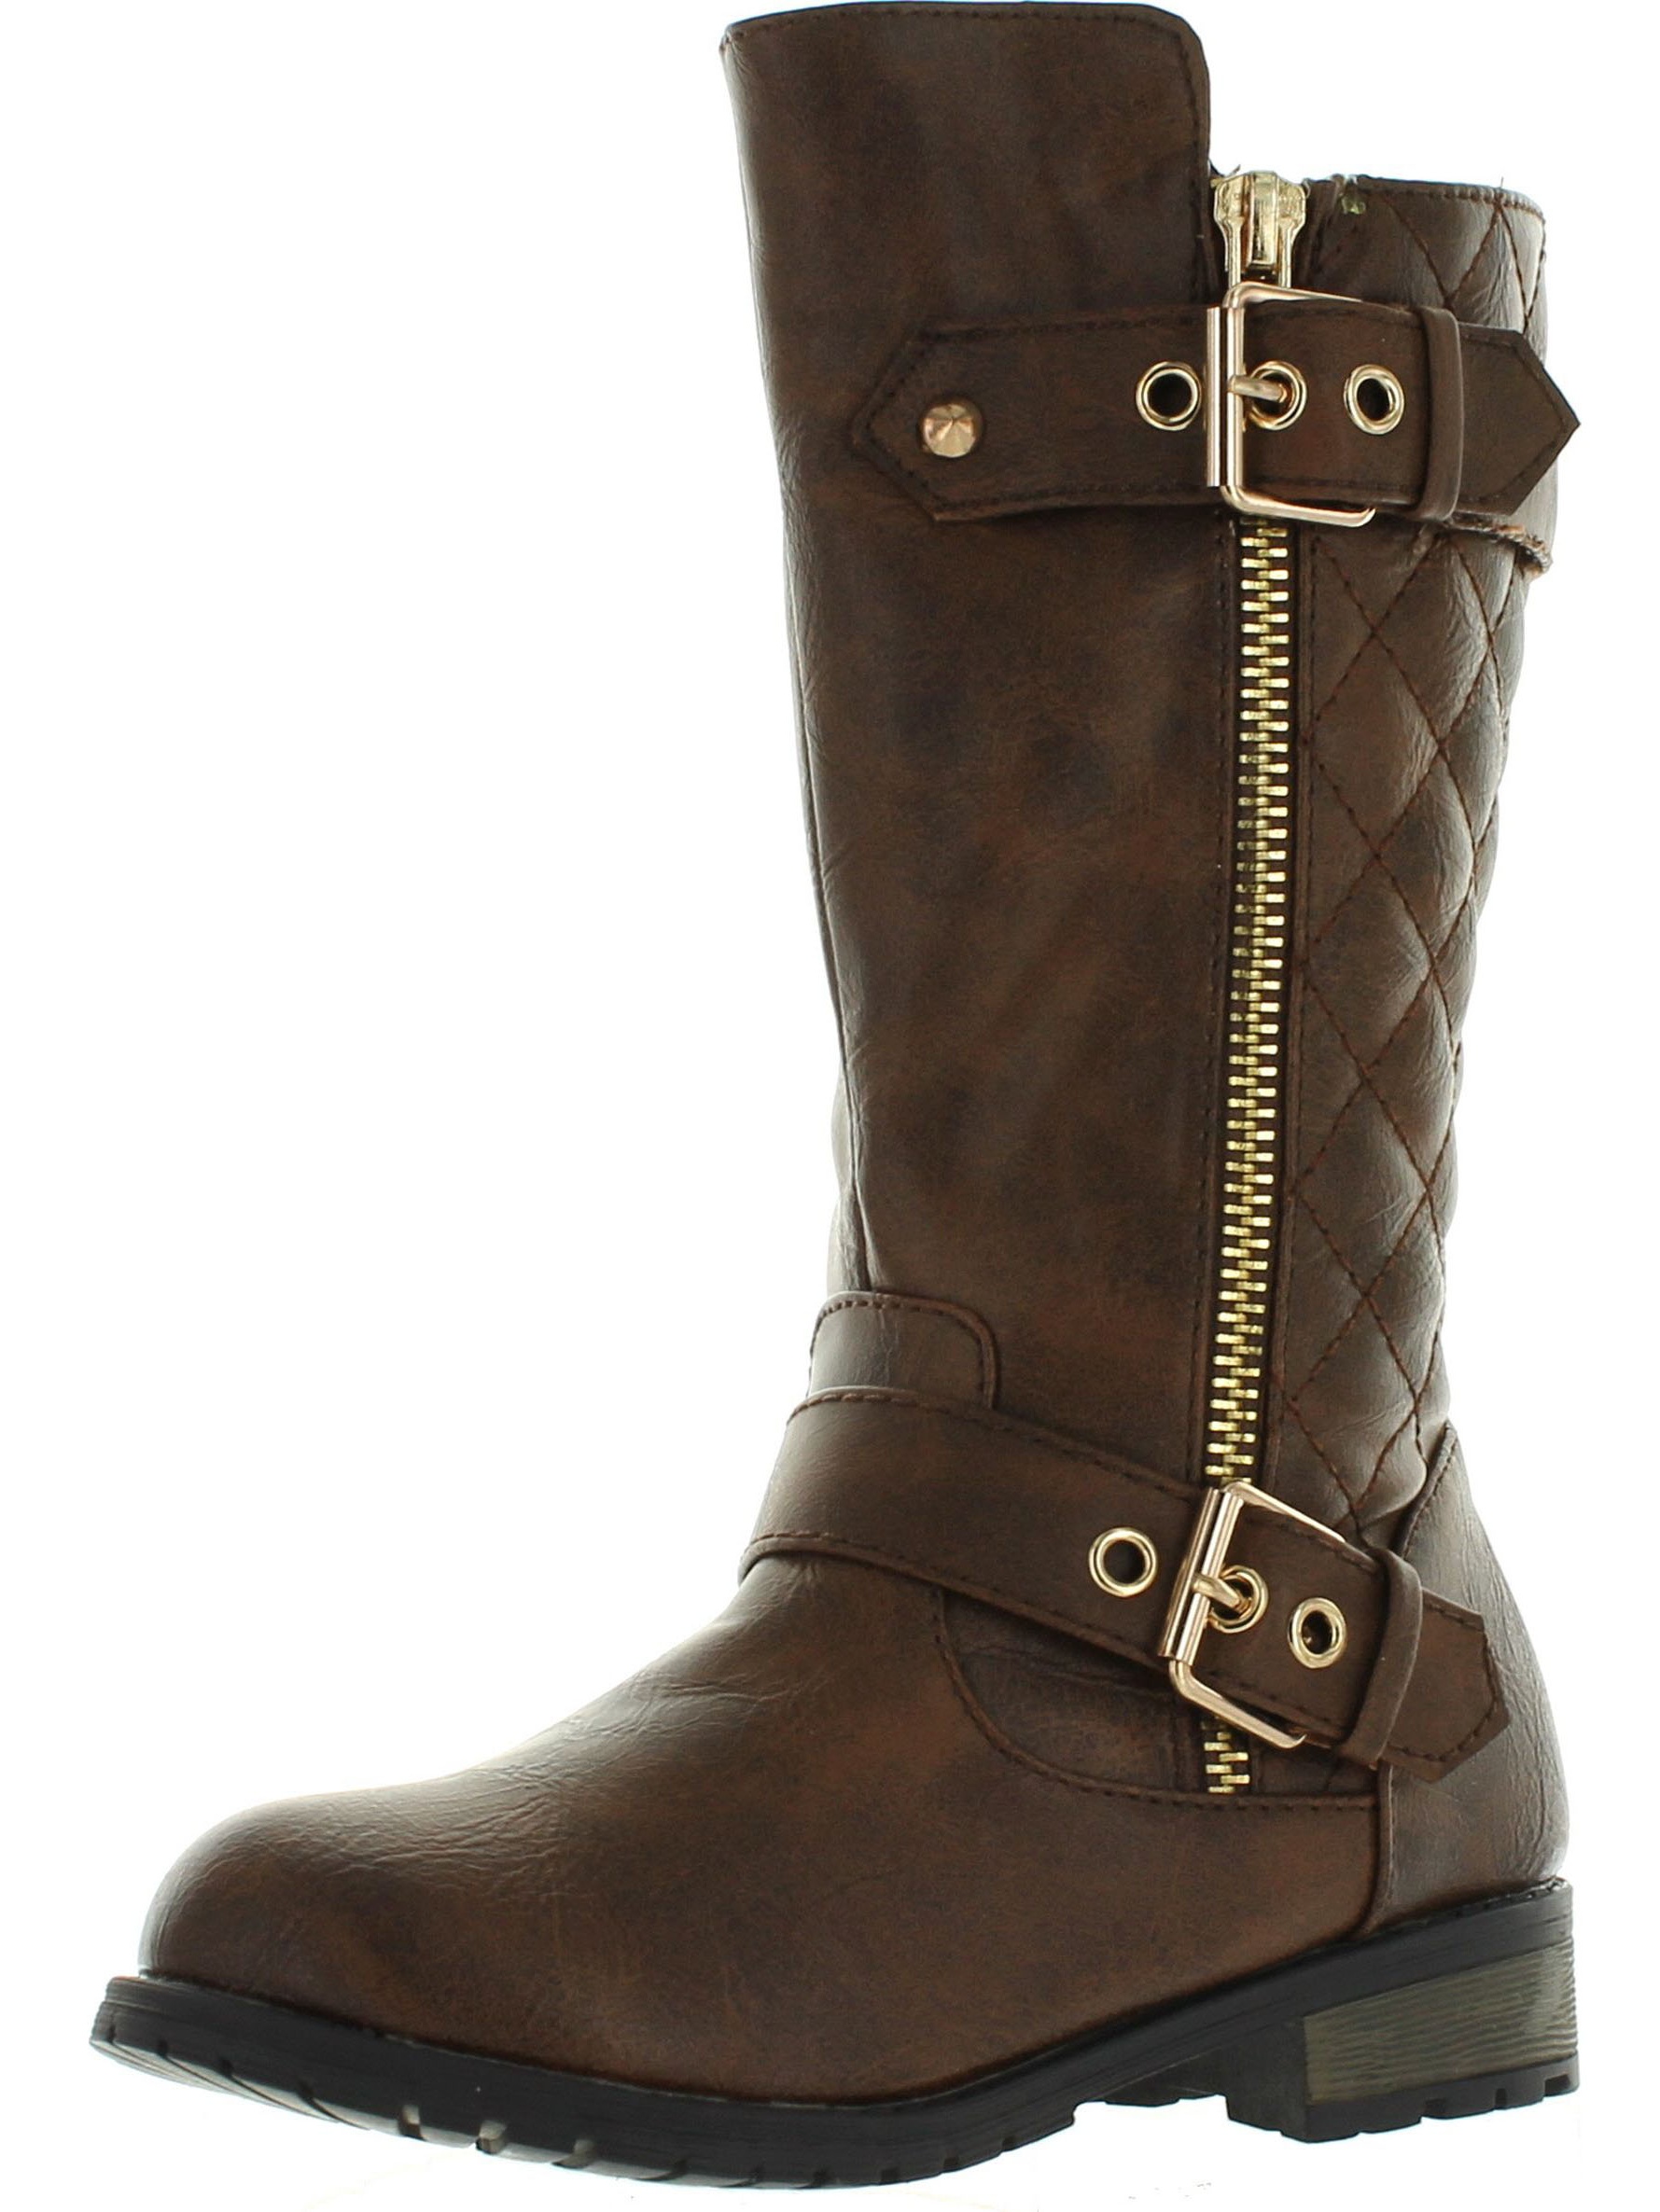 Girls Boots & Booties - Walmart.com